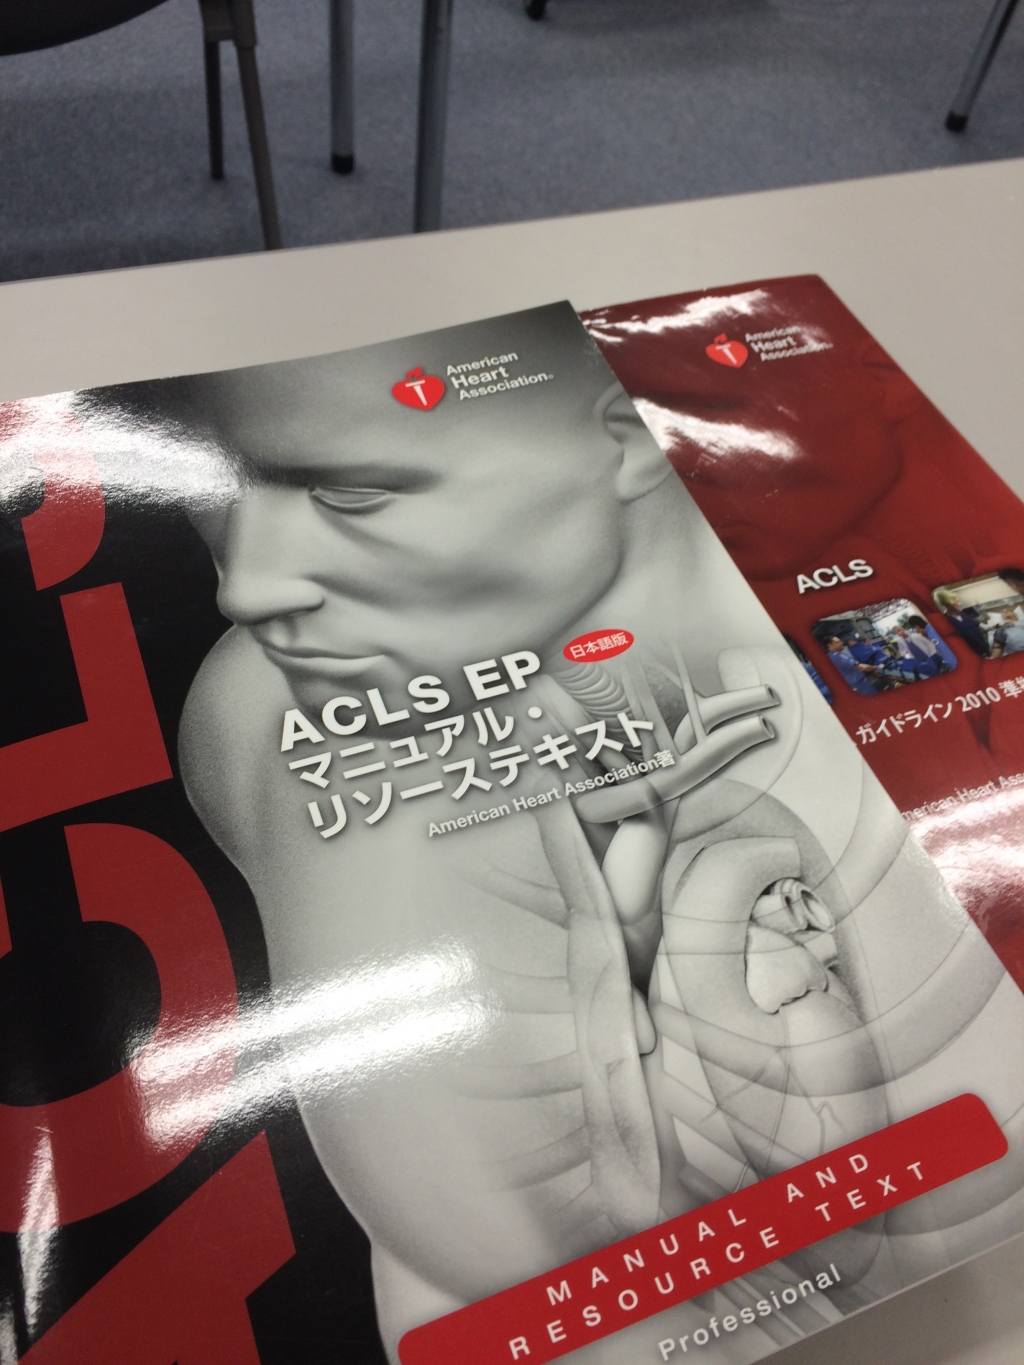 ACLS EPマニュアル・リソーステキスト日本語版 - 本